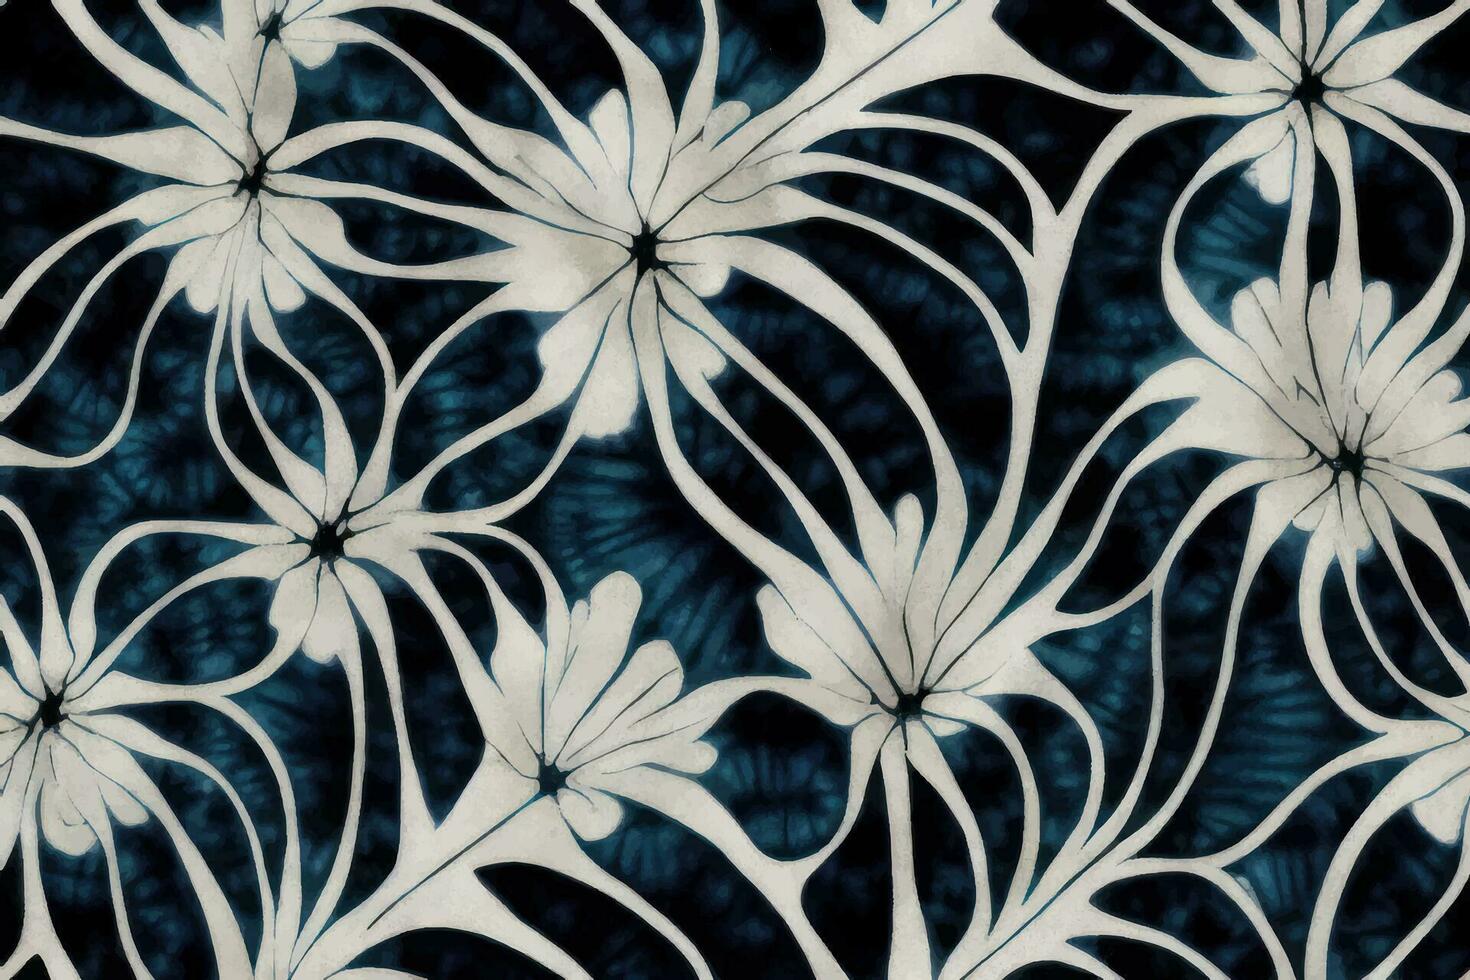 Tie dye shibori tye die abstract paint brush batik ink spiral swirl fabric retro botanical circle design geometric repeat drawing tile vector green brown dark blue colors , white blue florals